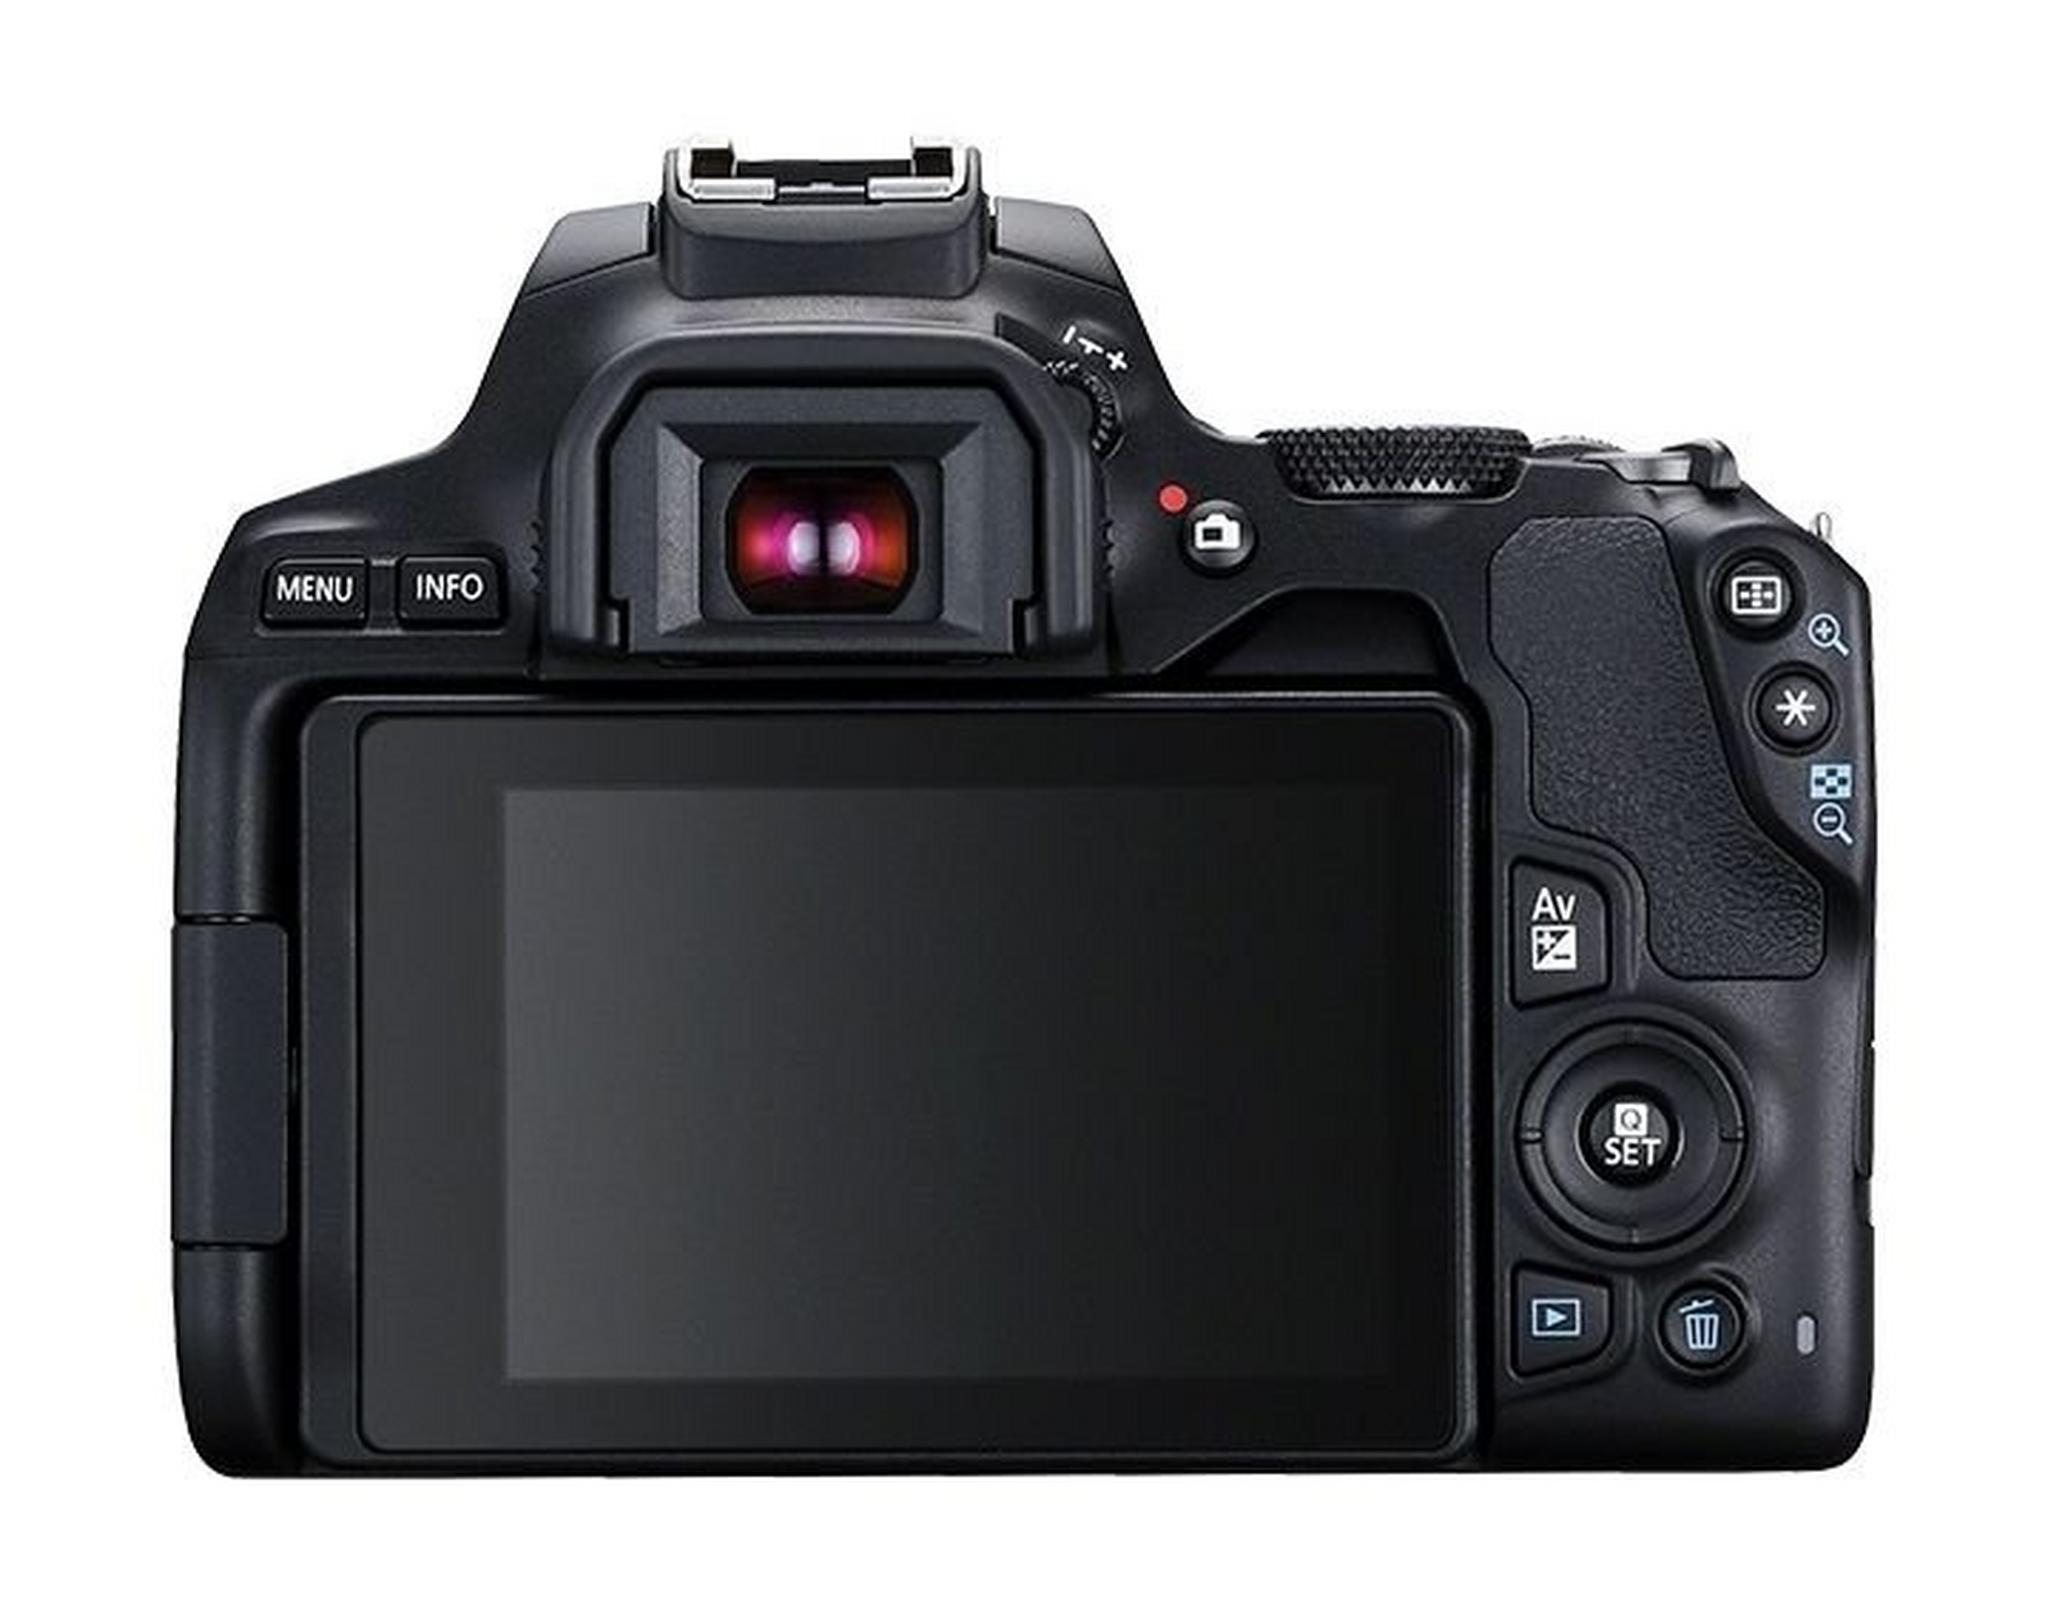 Canon EOS 250D DSLR Camera + 18-55mm Lens - Black